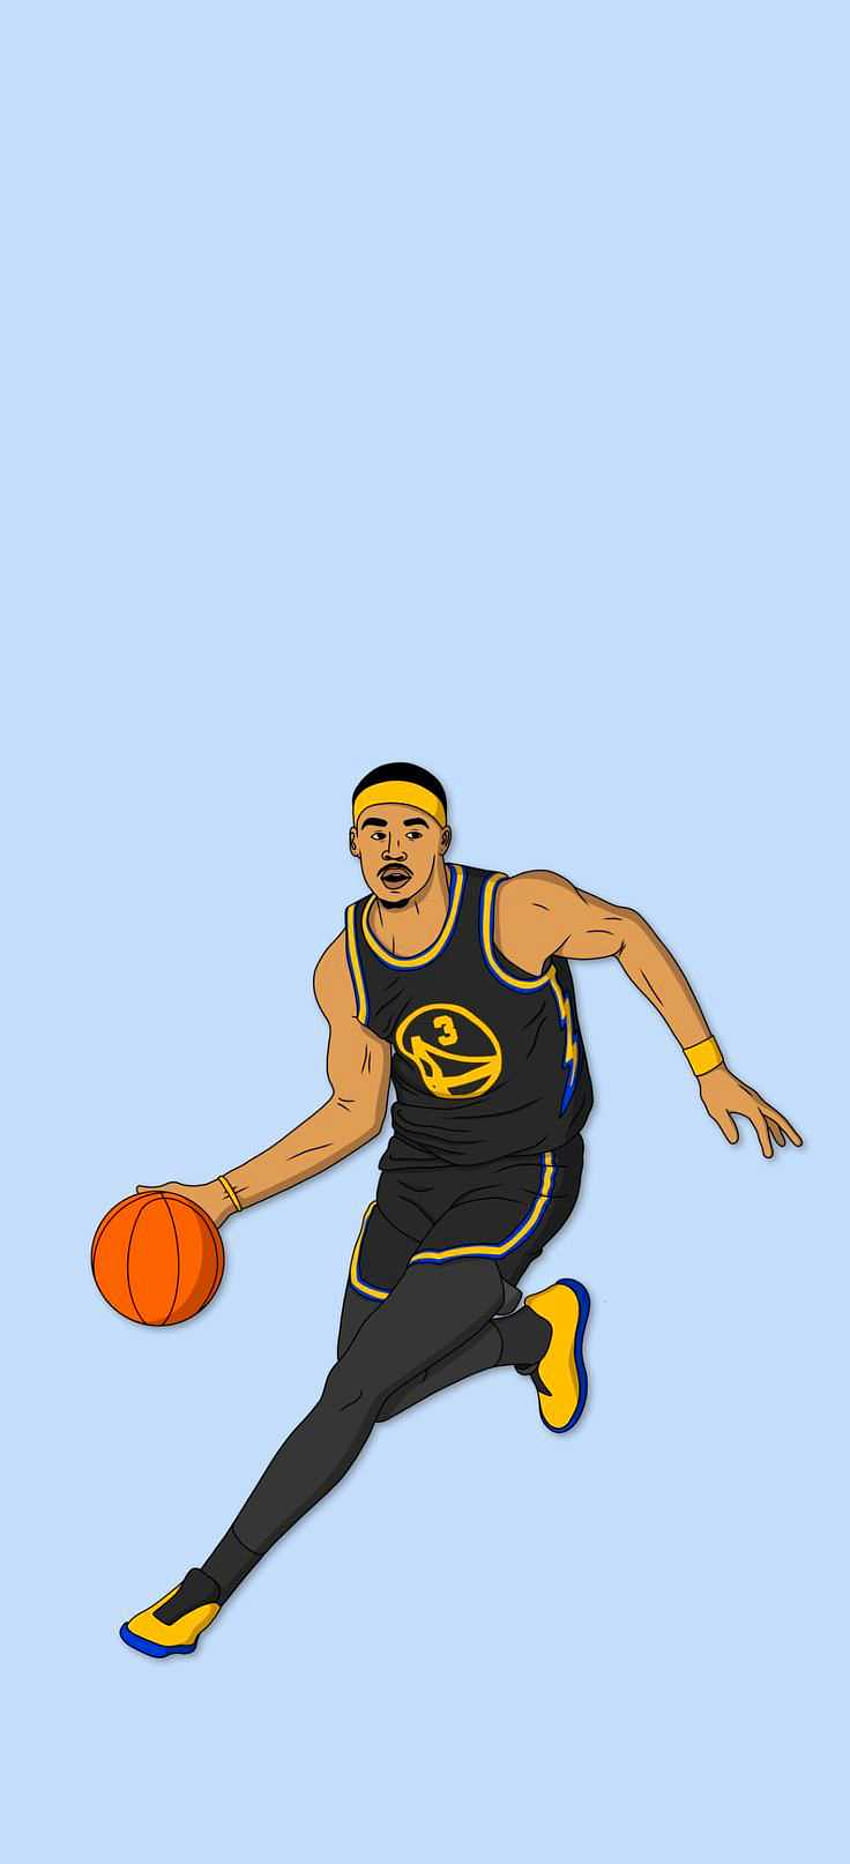 Download Dynamic Shot of NBA Star Jordan Poole in Action Wallpaper   Wallpaperscom